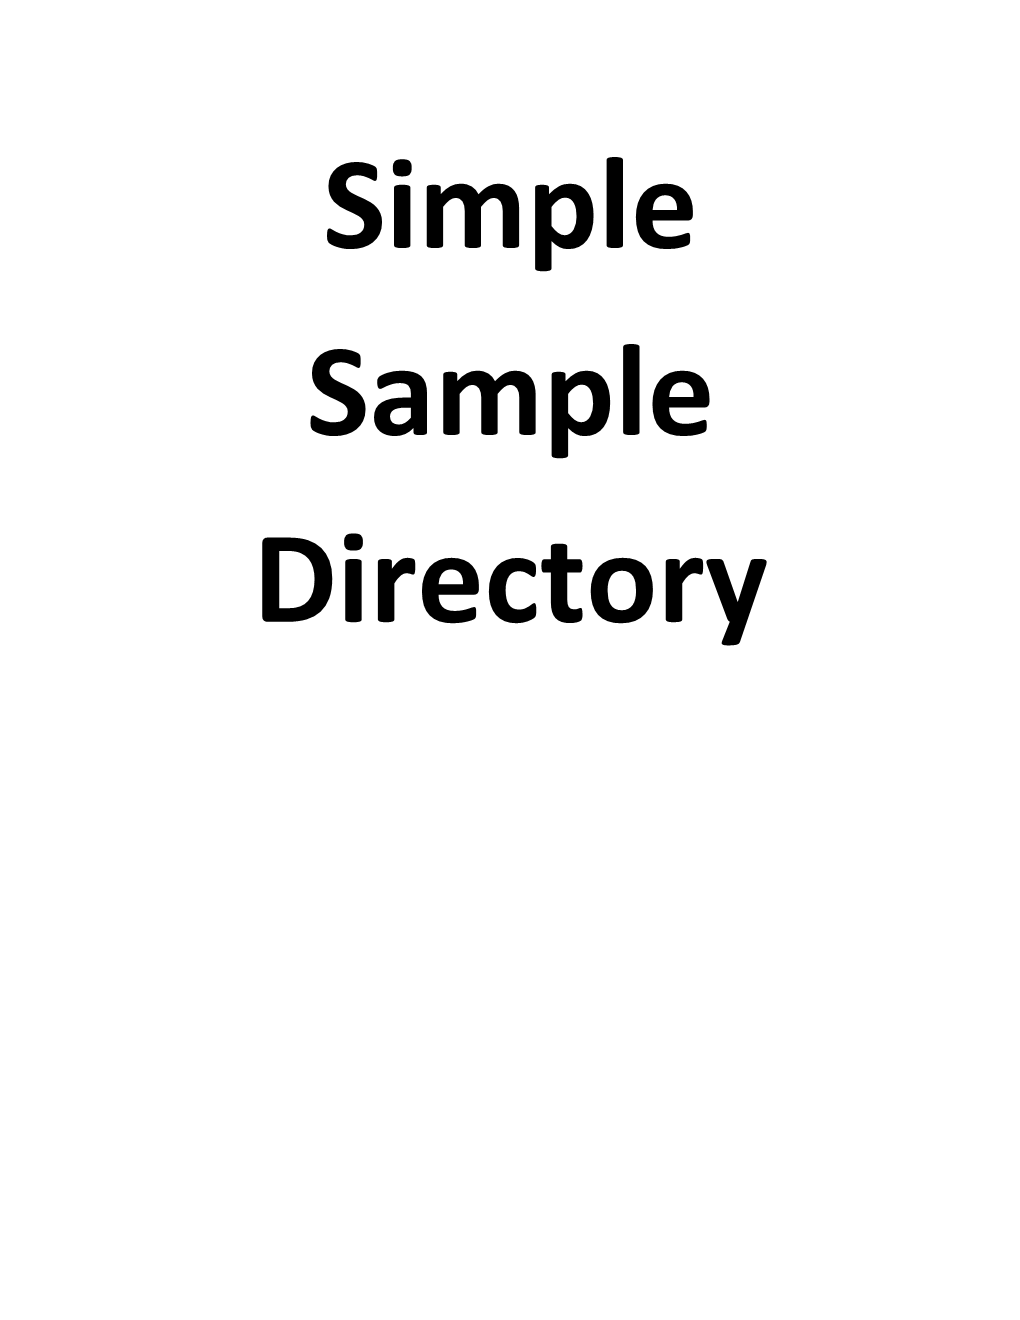 Simple Sample Directory